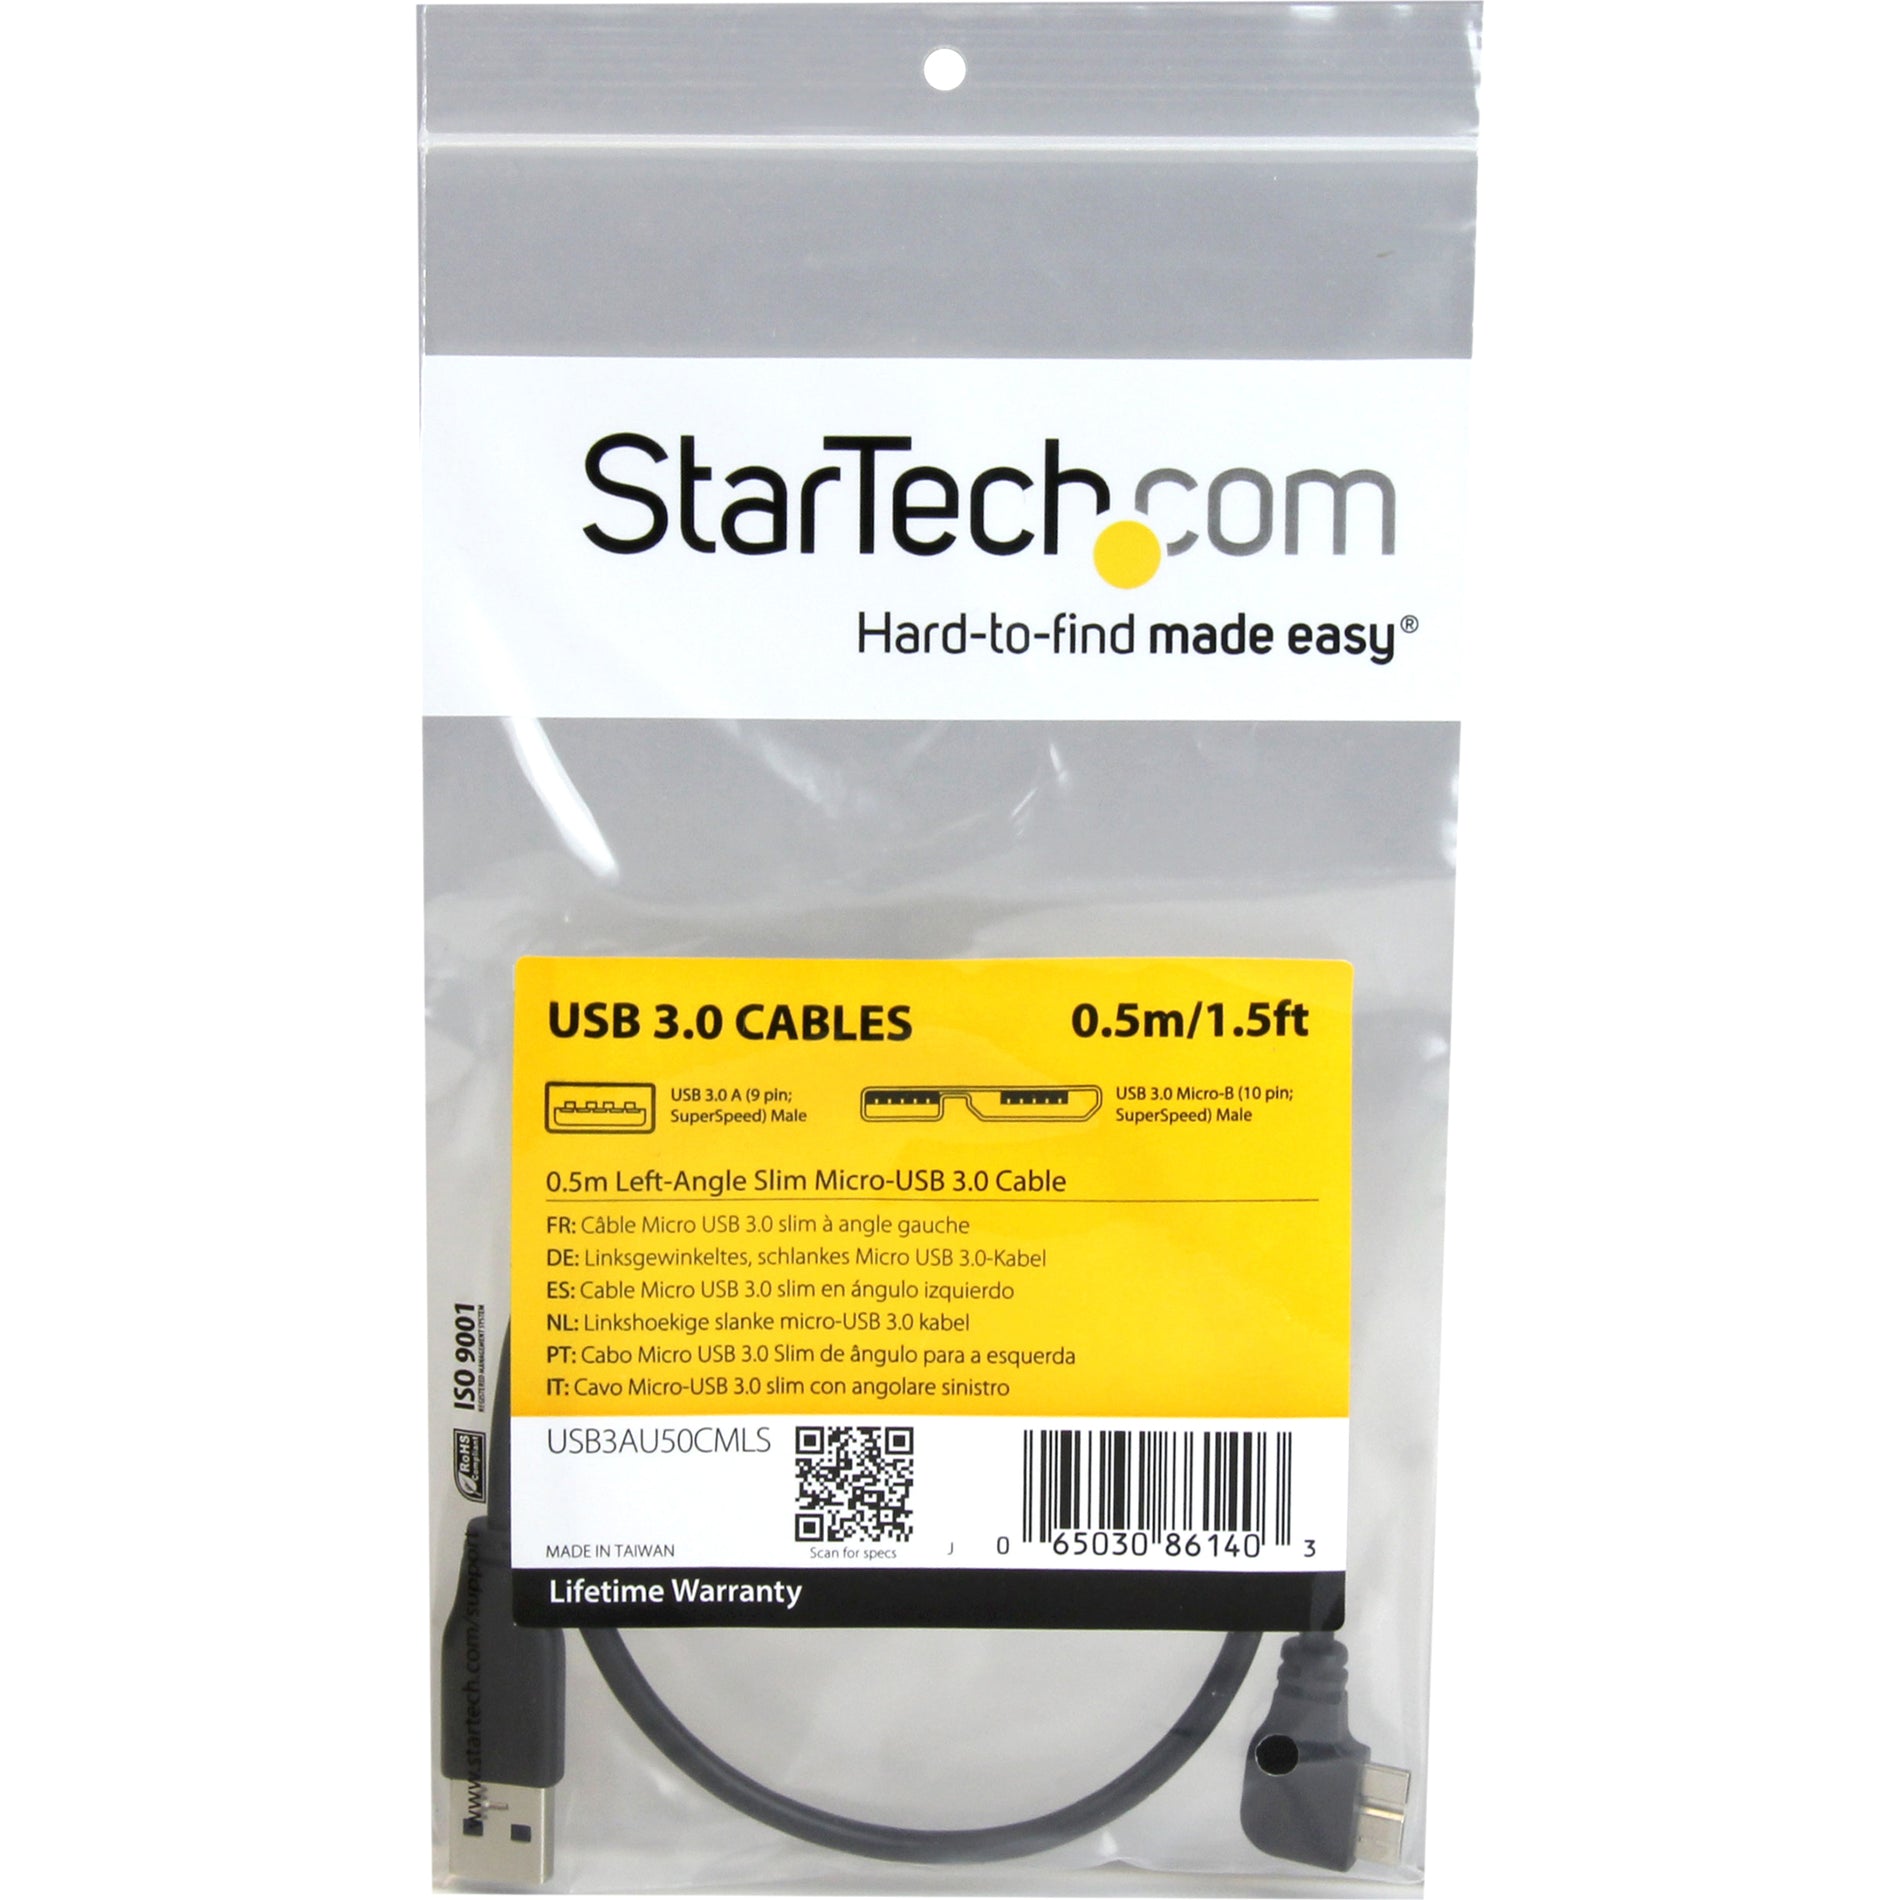 StarTech.com USB3AU50CMLS Slim Micro USB 3.0 Cable - M/M - Left-Angle Micro-USB - 0.5m (20in), Flexible, Strain Resistant, Damage Resistant, Charging, Bend Resistant